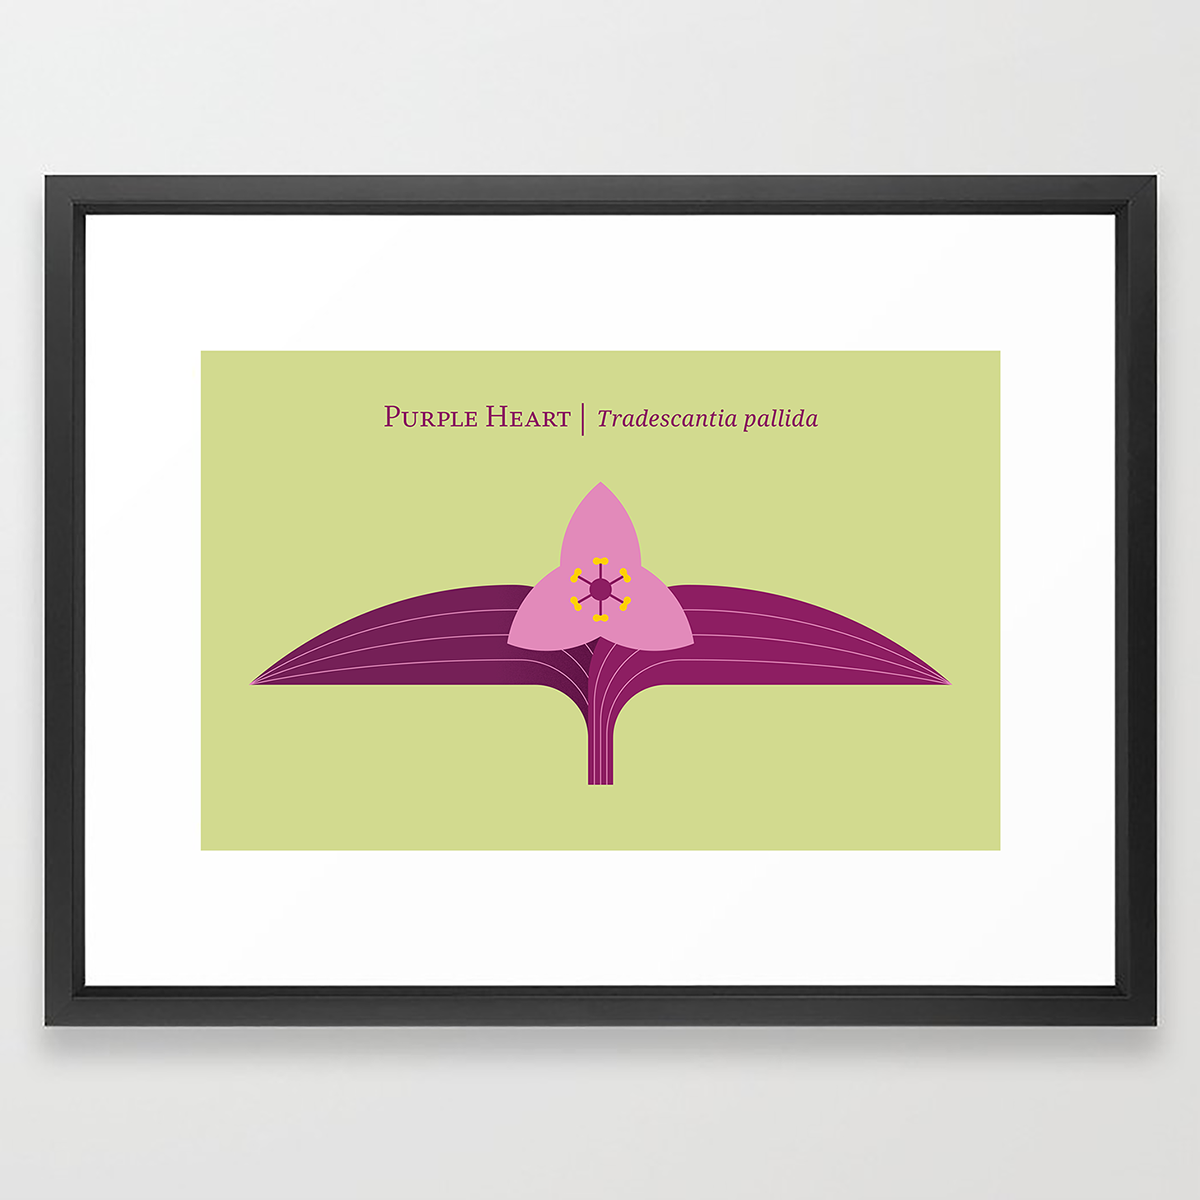 Purple Heart Modern Art Print Poster Illustration and Design